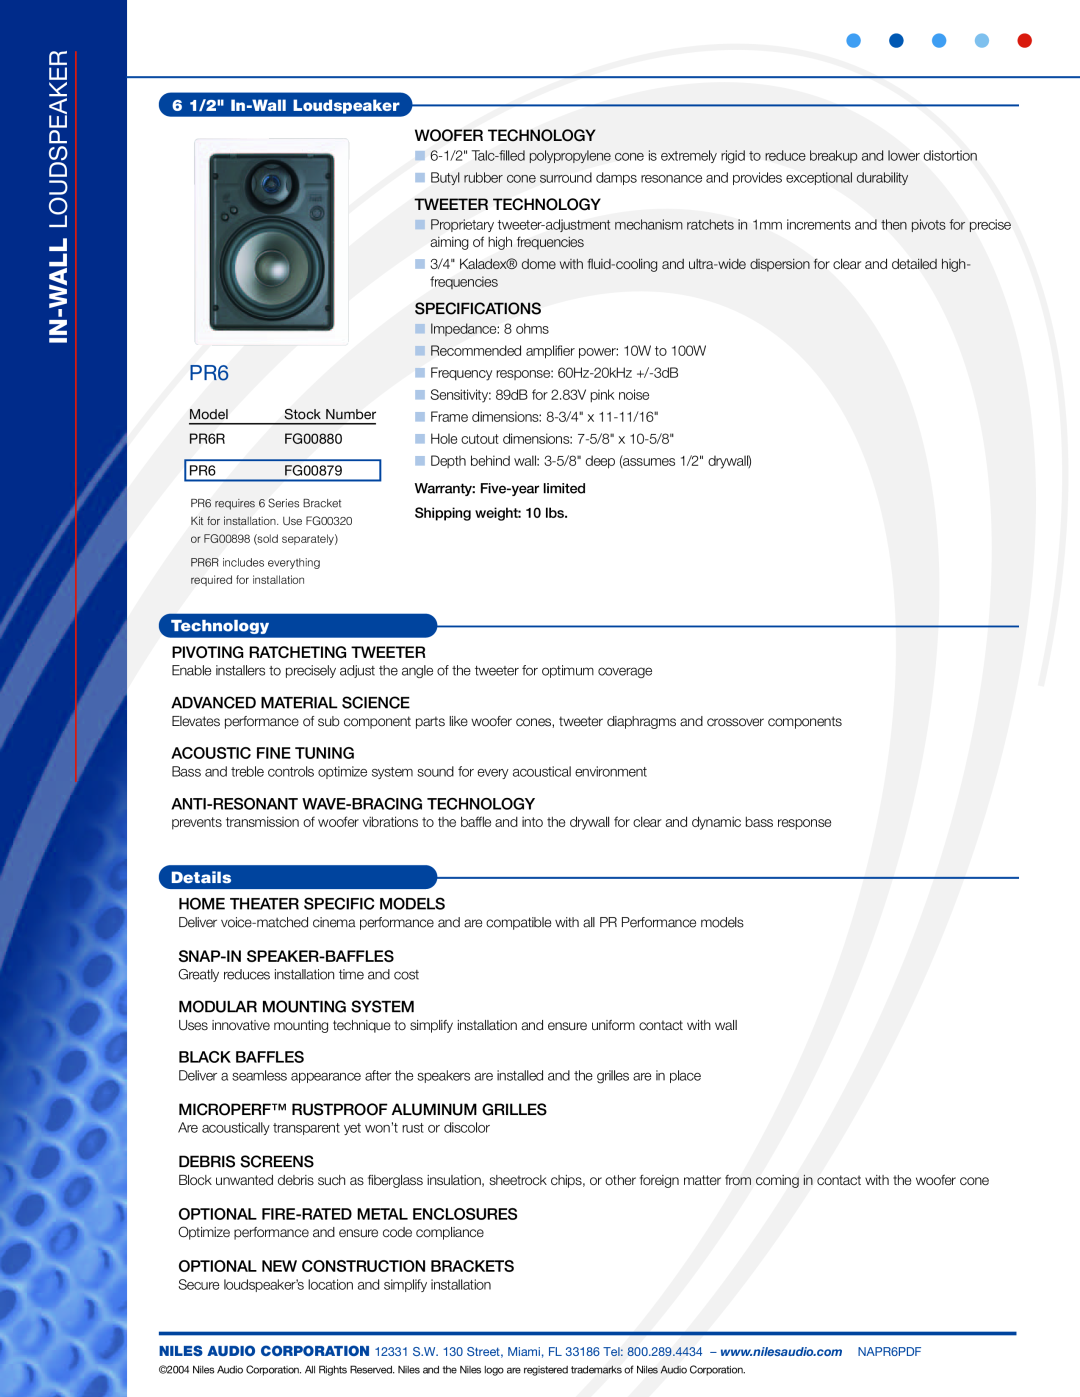 Niles Audio PR6 specifications In-Wall Loudspeaker, 6 1/2 In-WallLoudspeaker, Technology, Details 